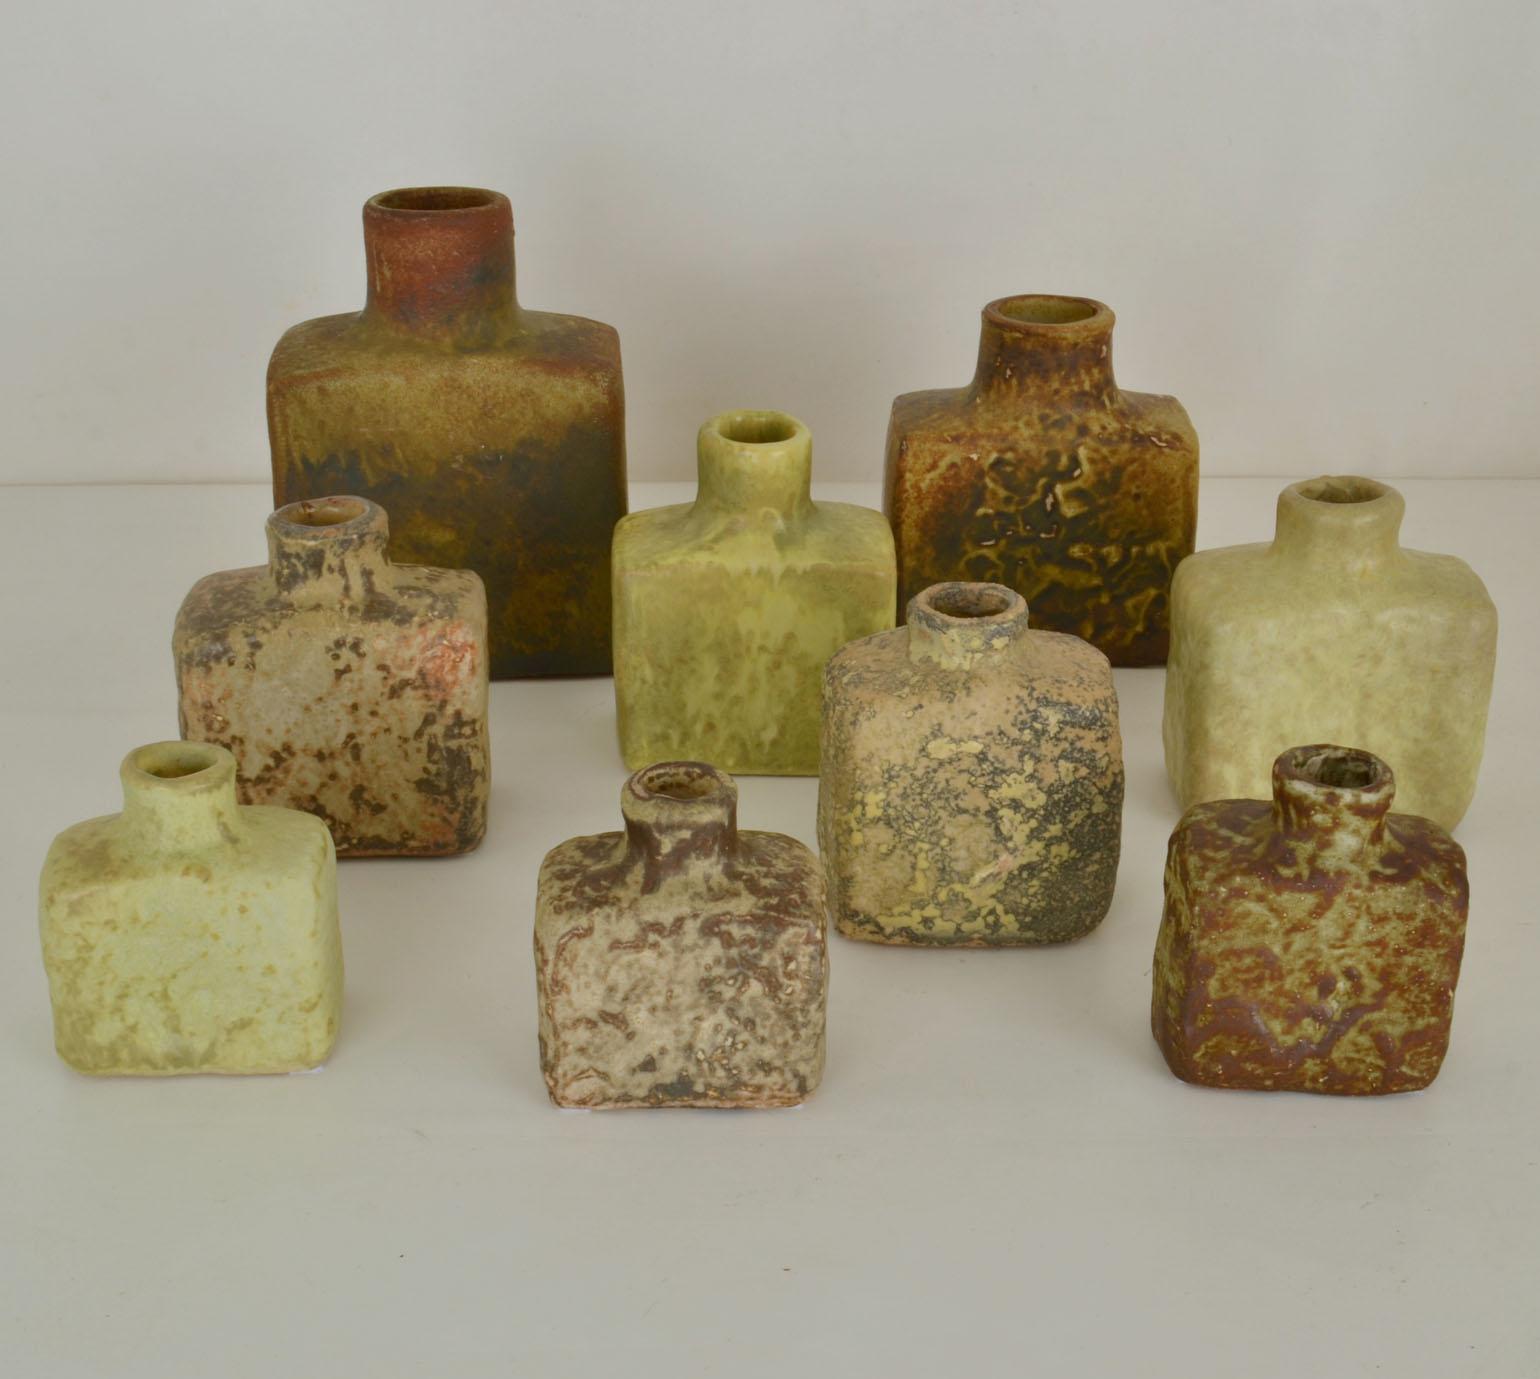 Dutch Group of Square Studio Ceramic Vases in Sage and Earth Tones